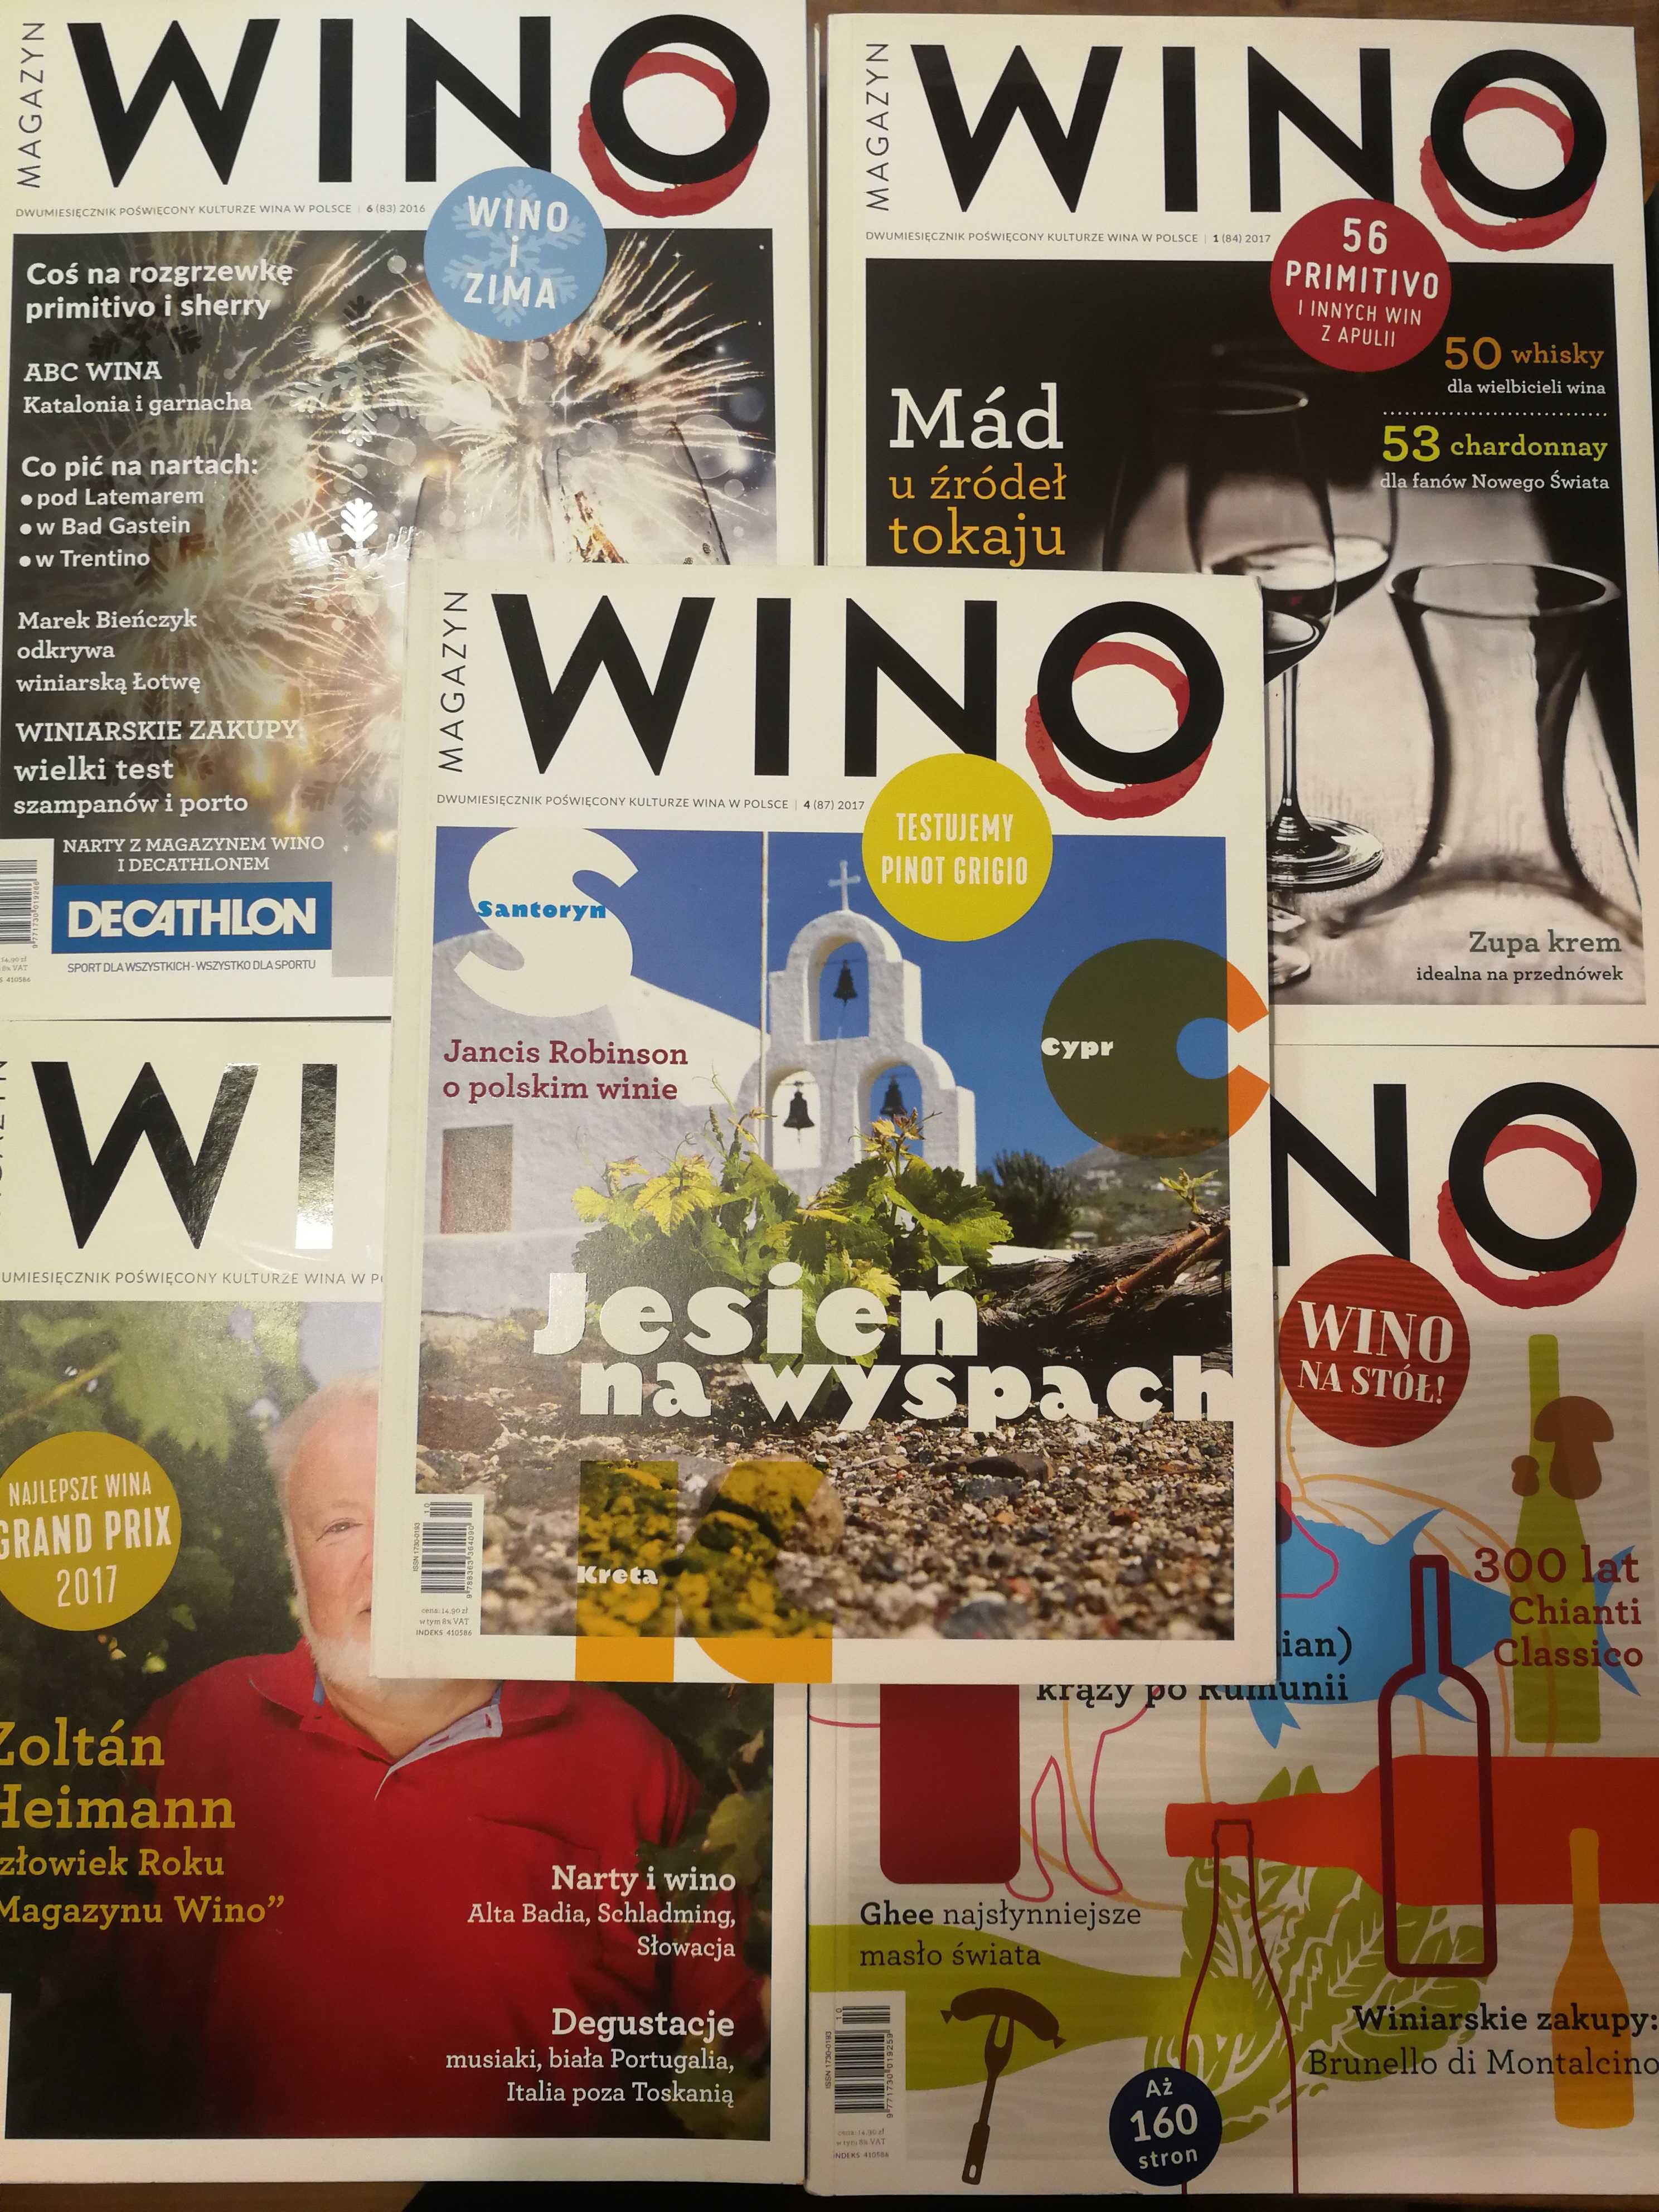 Magazyn Wino - archiwalne numery